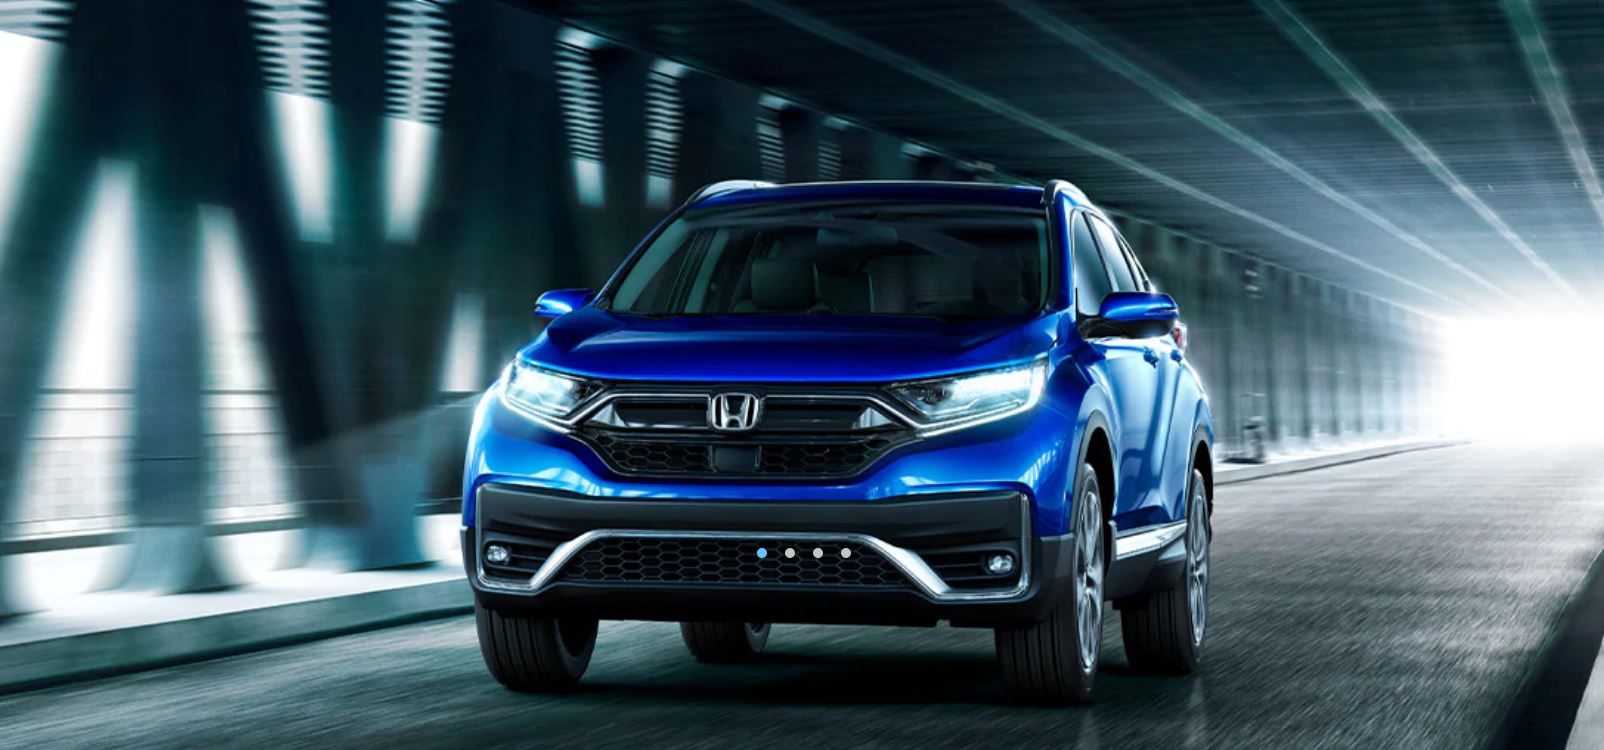 A Sneak Peak Into All New Honda Crv 2020 Inspirationfeed